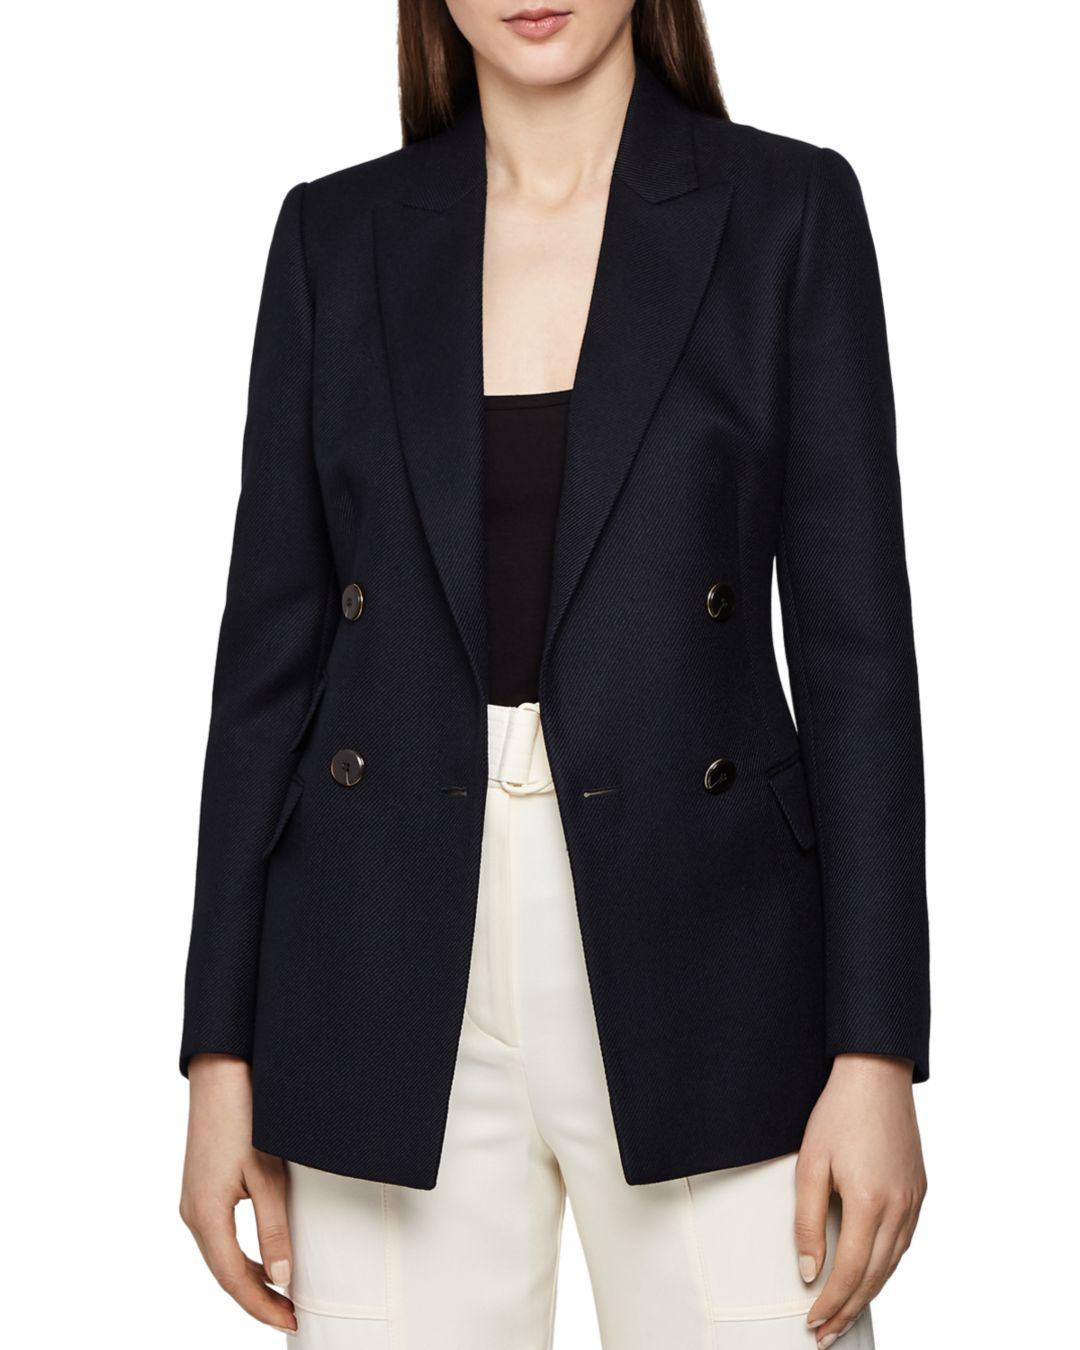 Reiss Ledbury Jacket - Wool Blend Double Breasted Blazer in Blue - Save ...